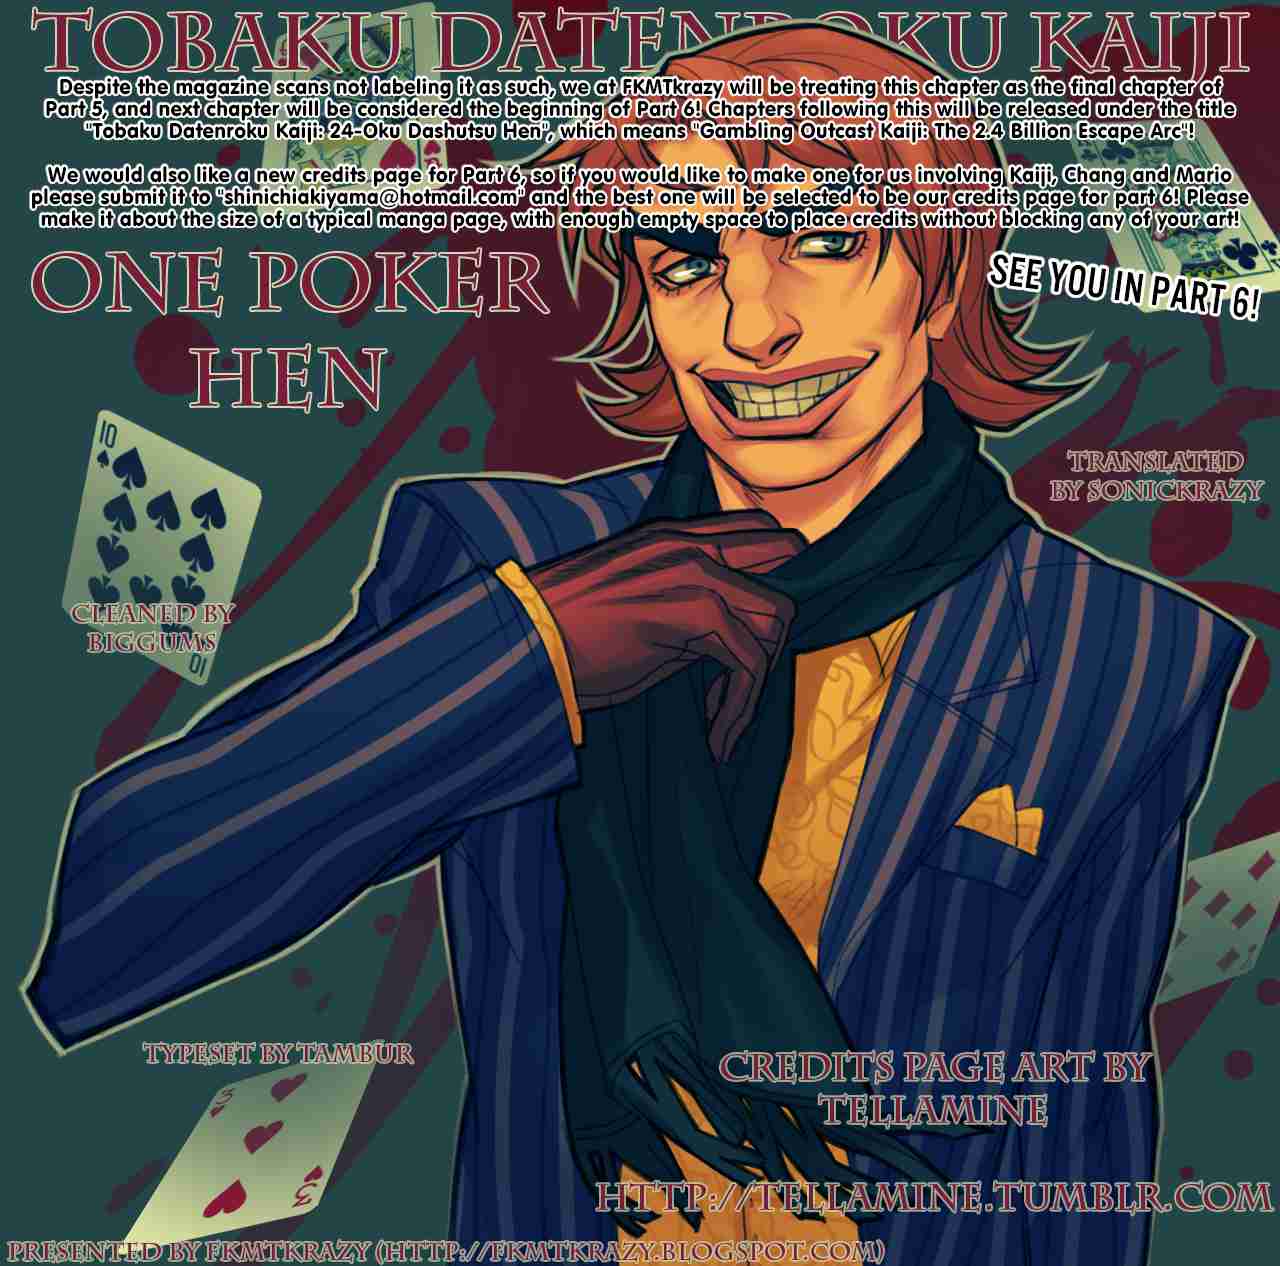 Tobaku Datenroku Kaiji: One Poker Hen Vol. 16 Ch. 255 Drop